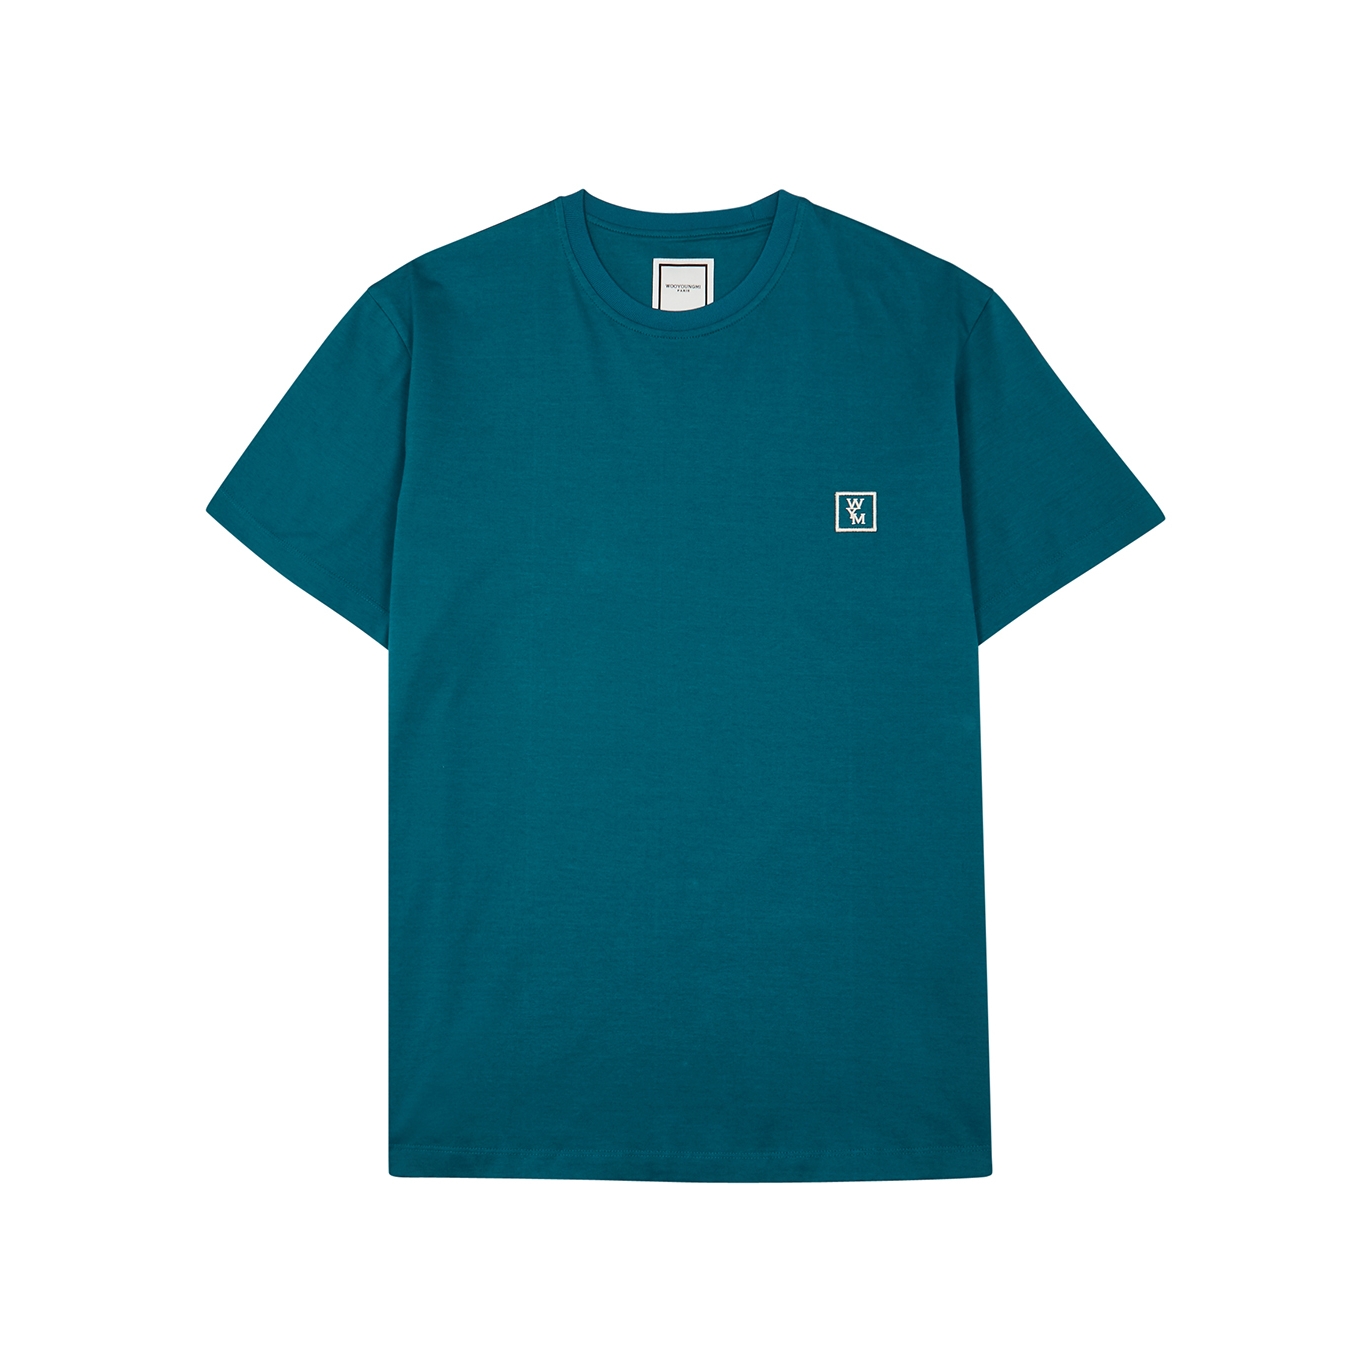 Wooyoungmi Teal Logo Cotton T-shirt - Blue - 48